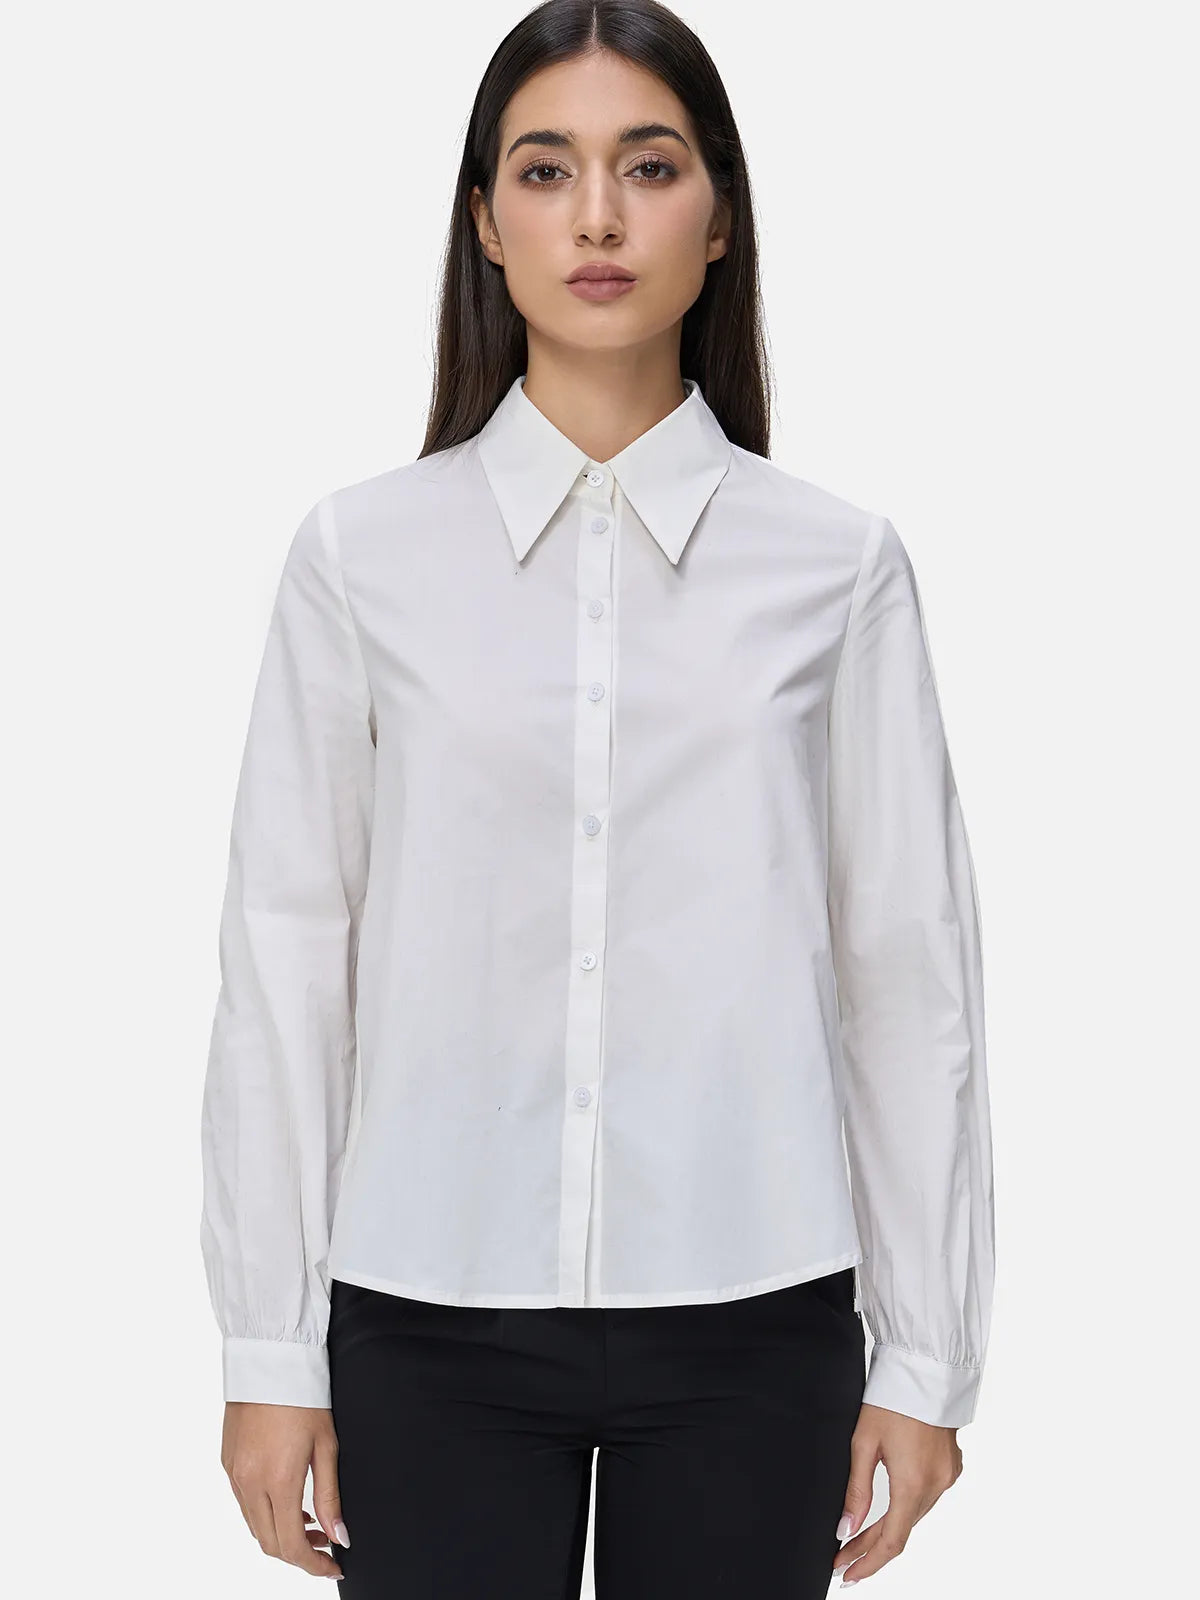 Versatile Two-Piece Sweater Set: Navy Round Neck sweater and white Shirt